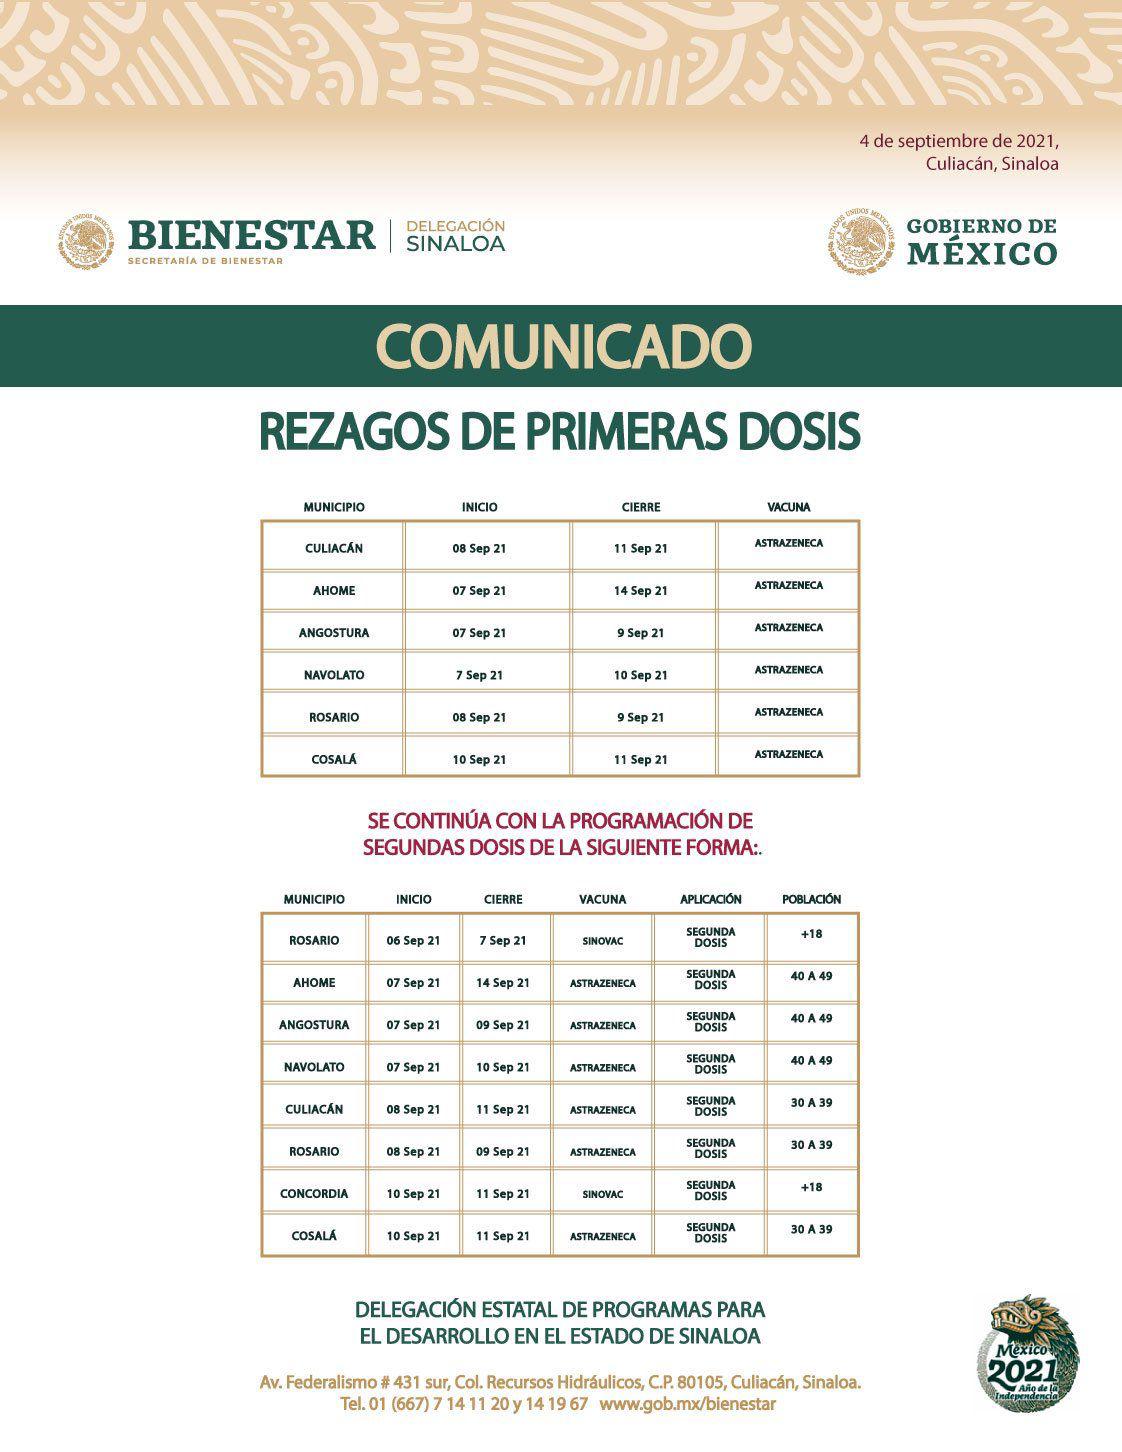 $!Sin fecha, aplicación de segunda dosis de AstraZeneca en Mazatlán